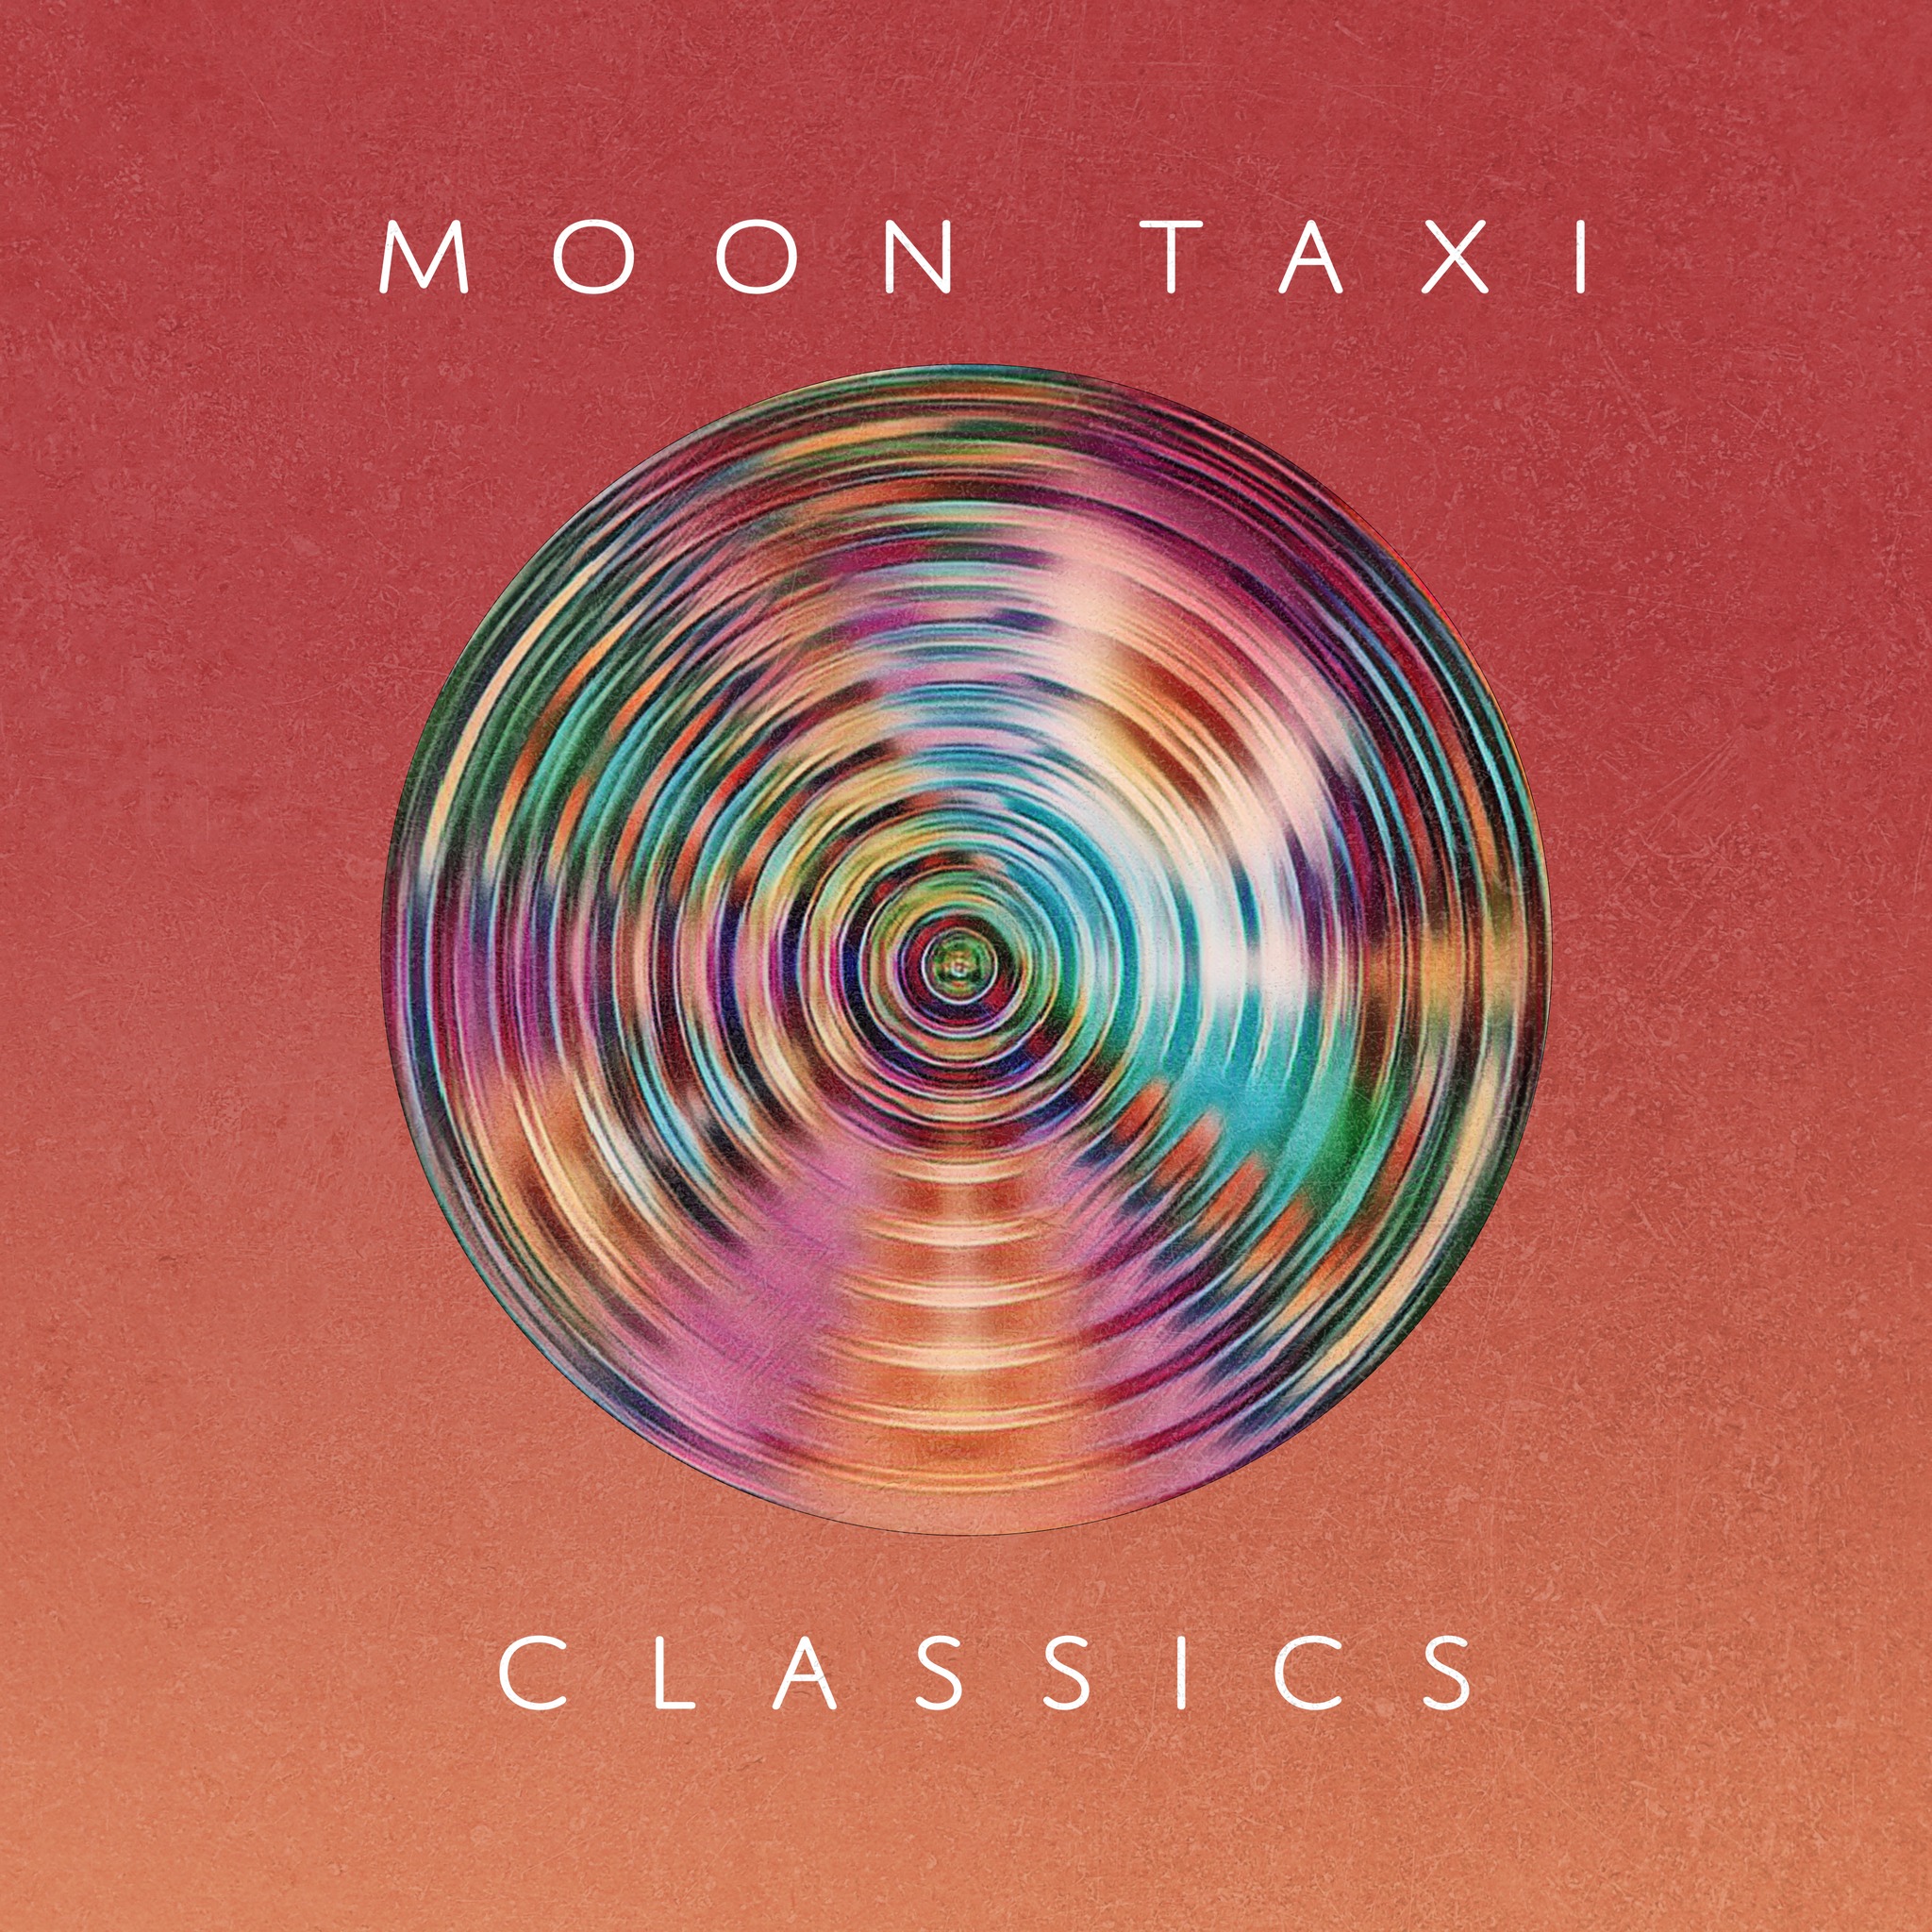 Moon Taxi Releases New Single "Classics"